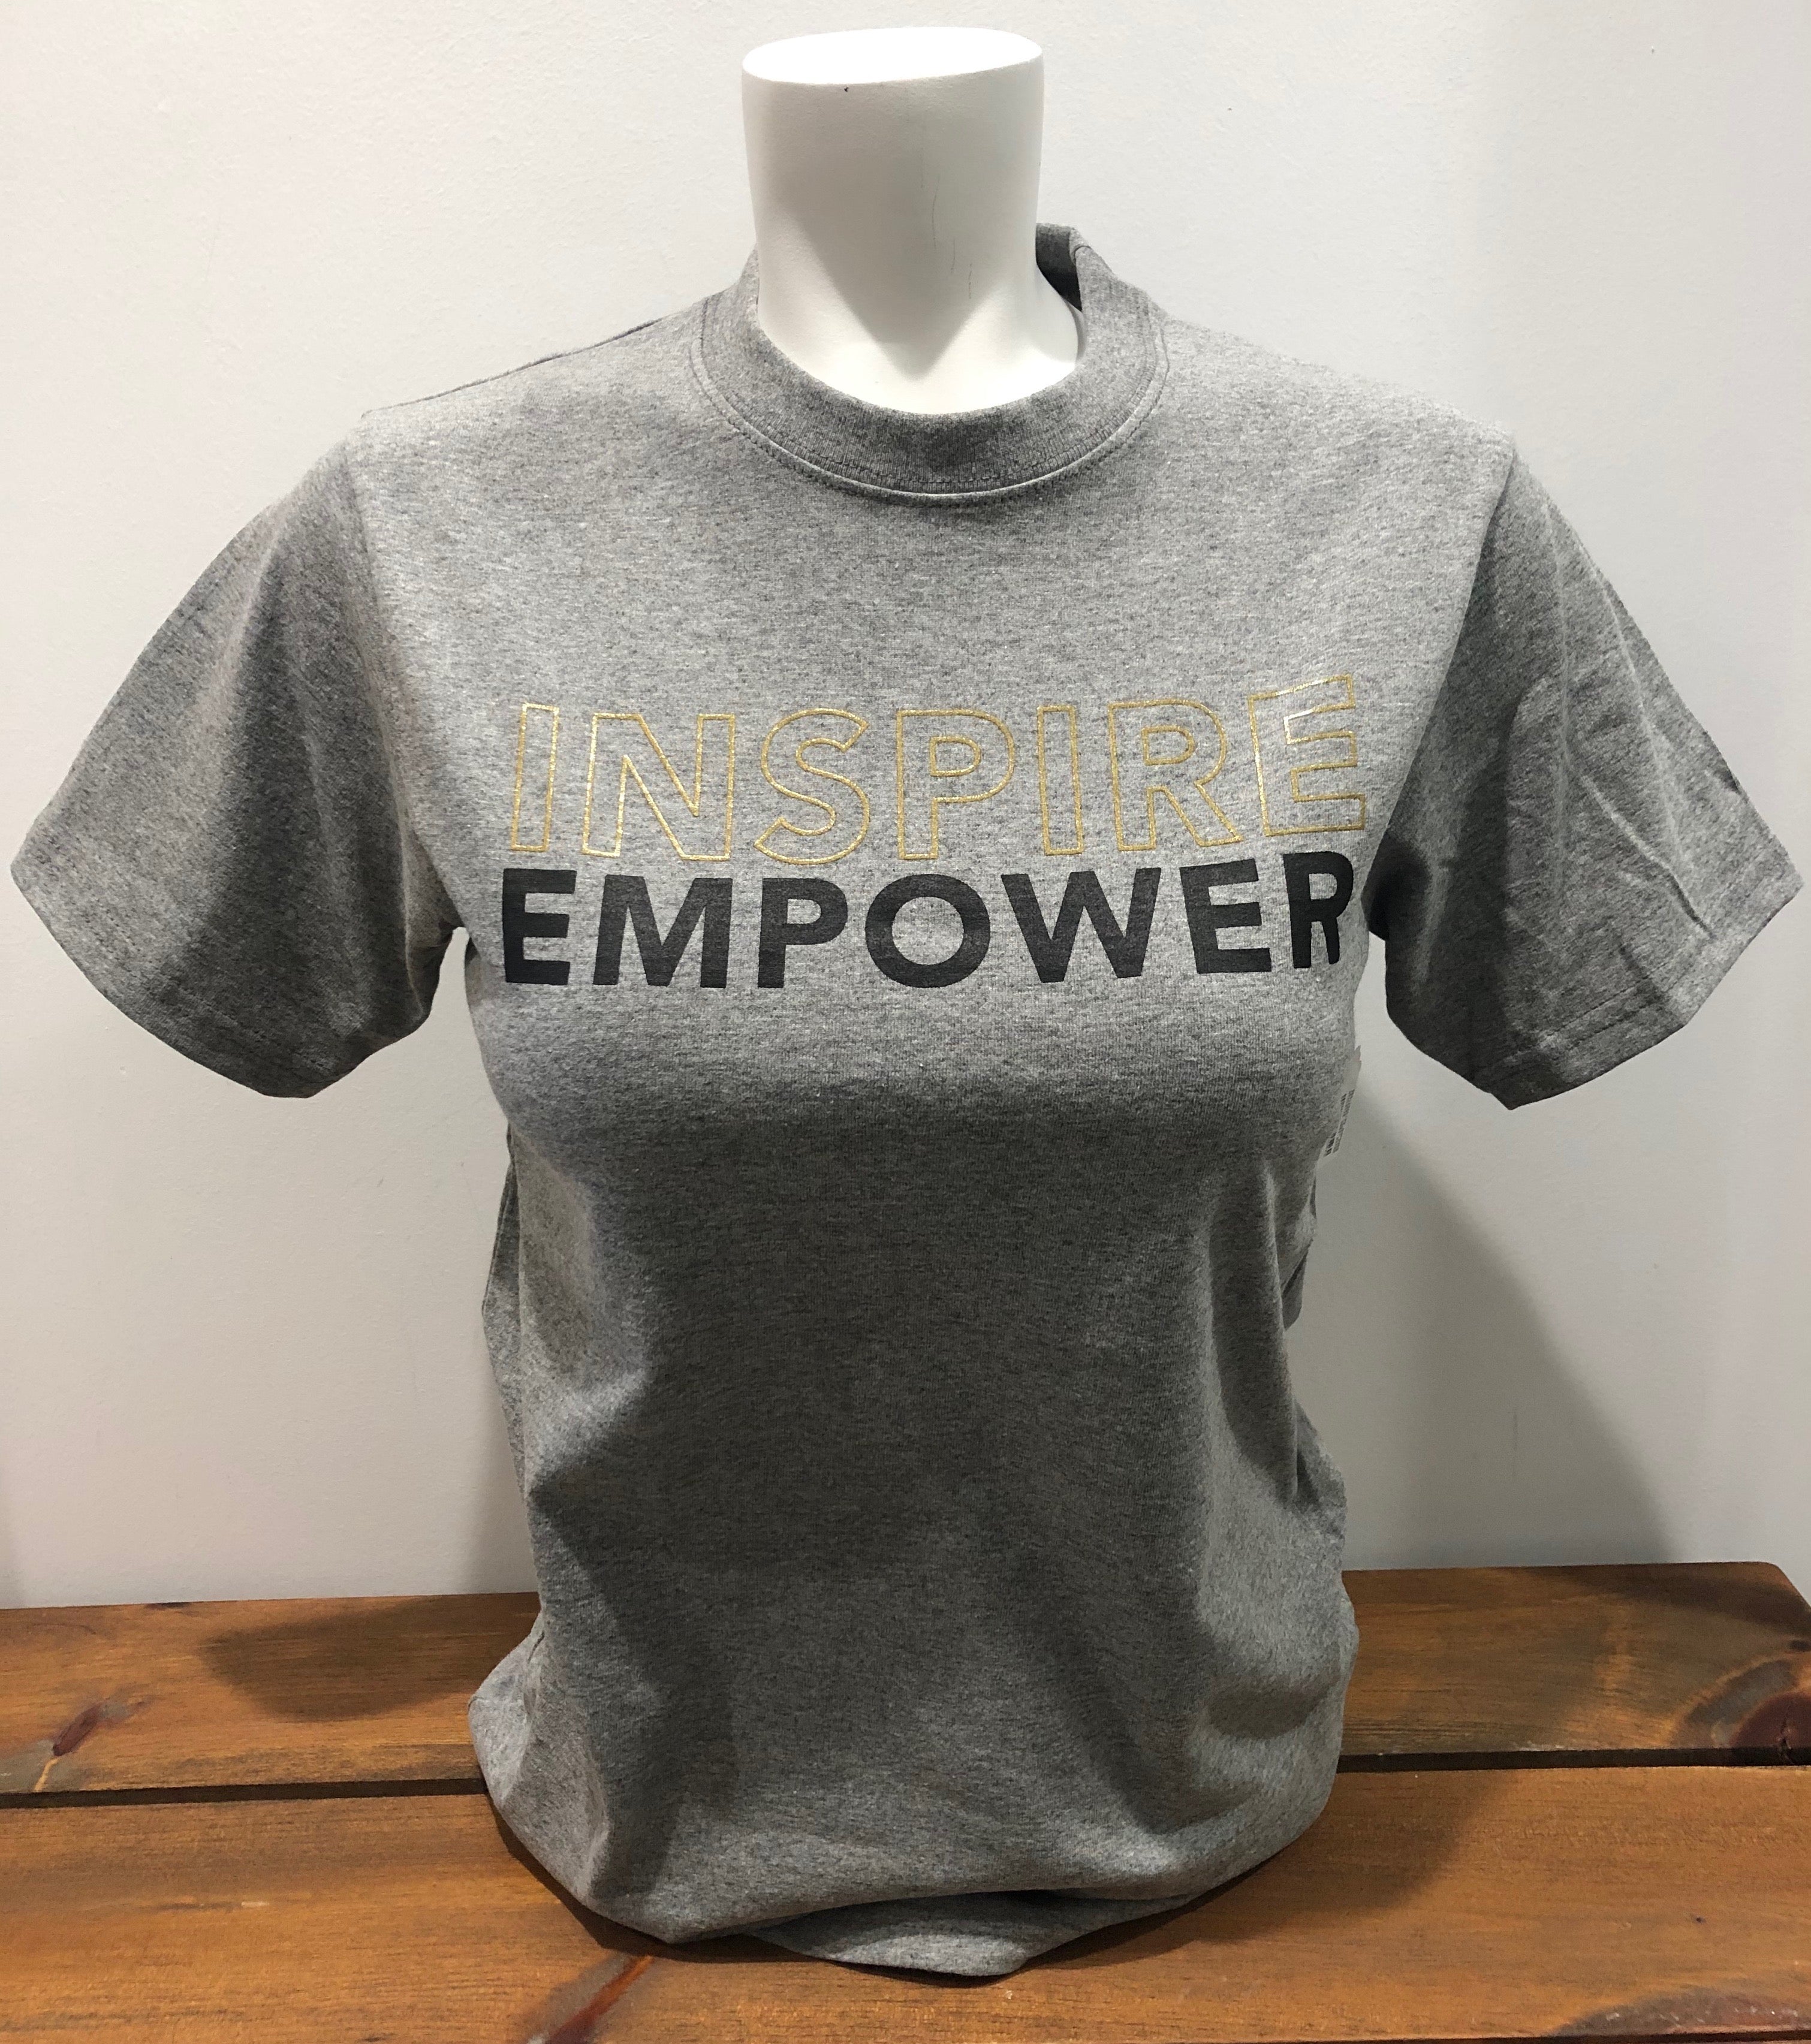 SGG - "Inspire Empower" T-Shirt STK ADULT